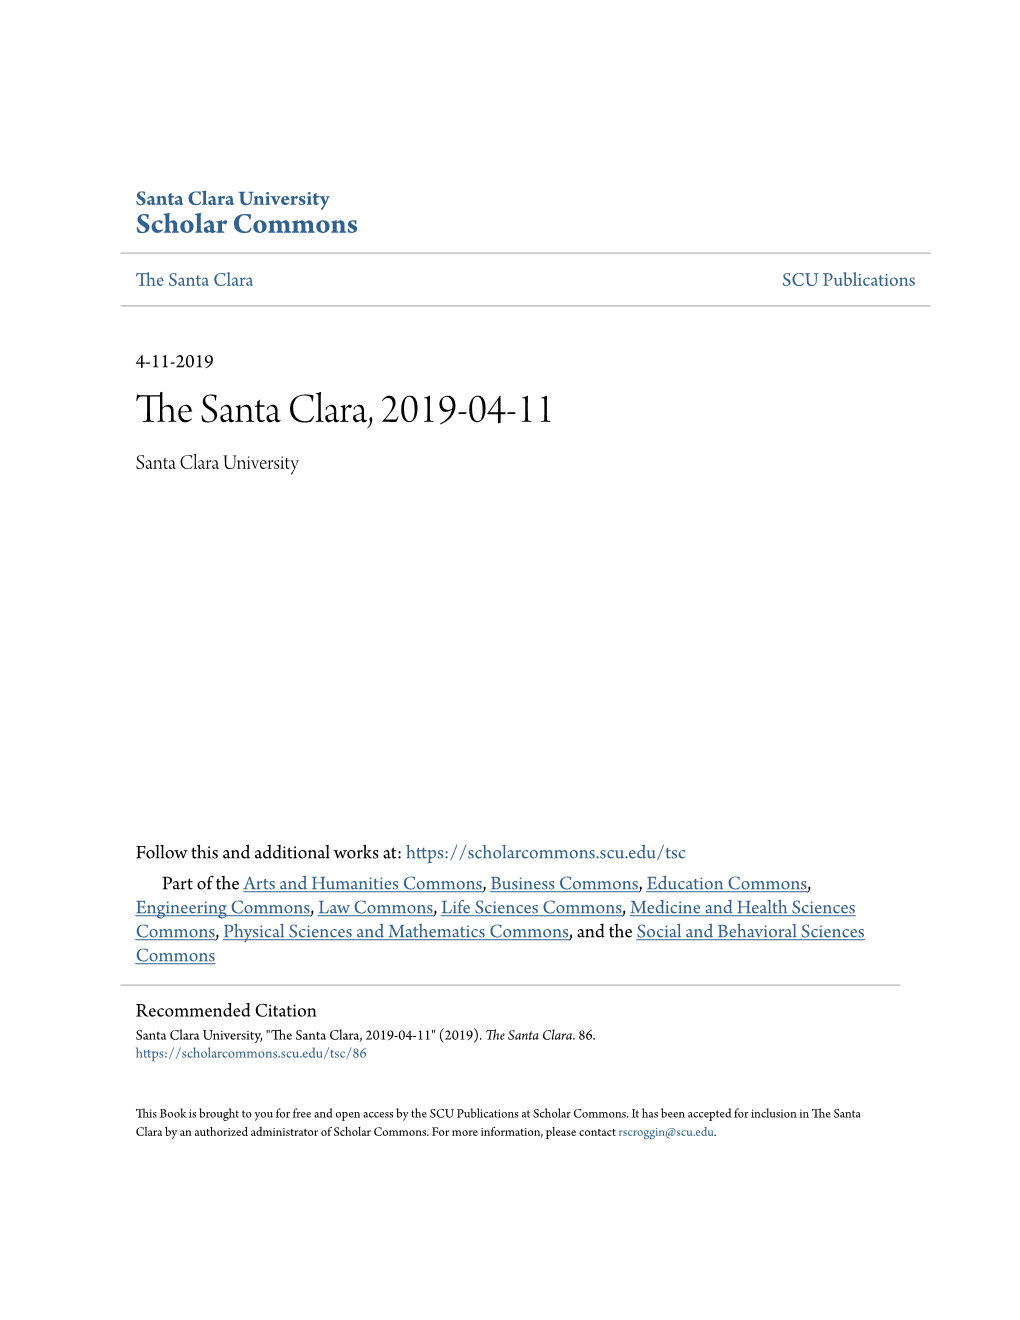 The Santa Clara, 2019-04-11